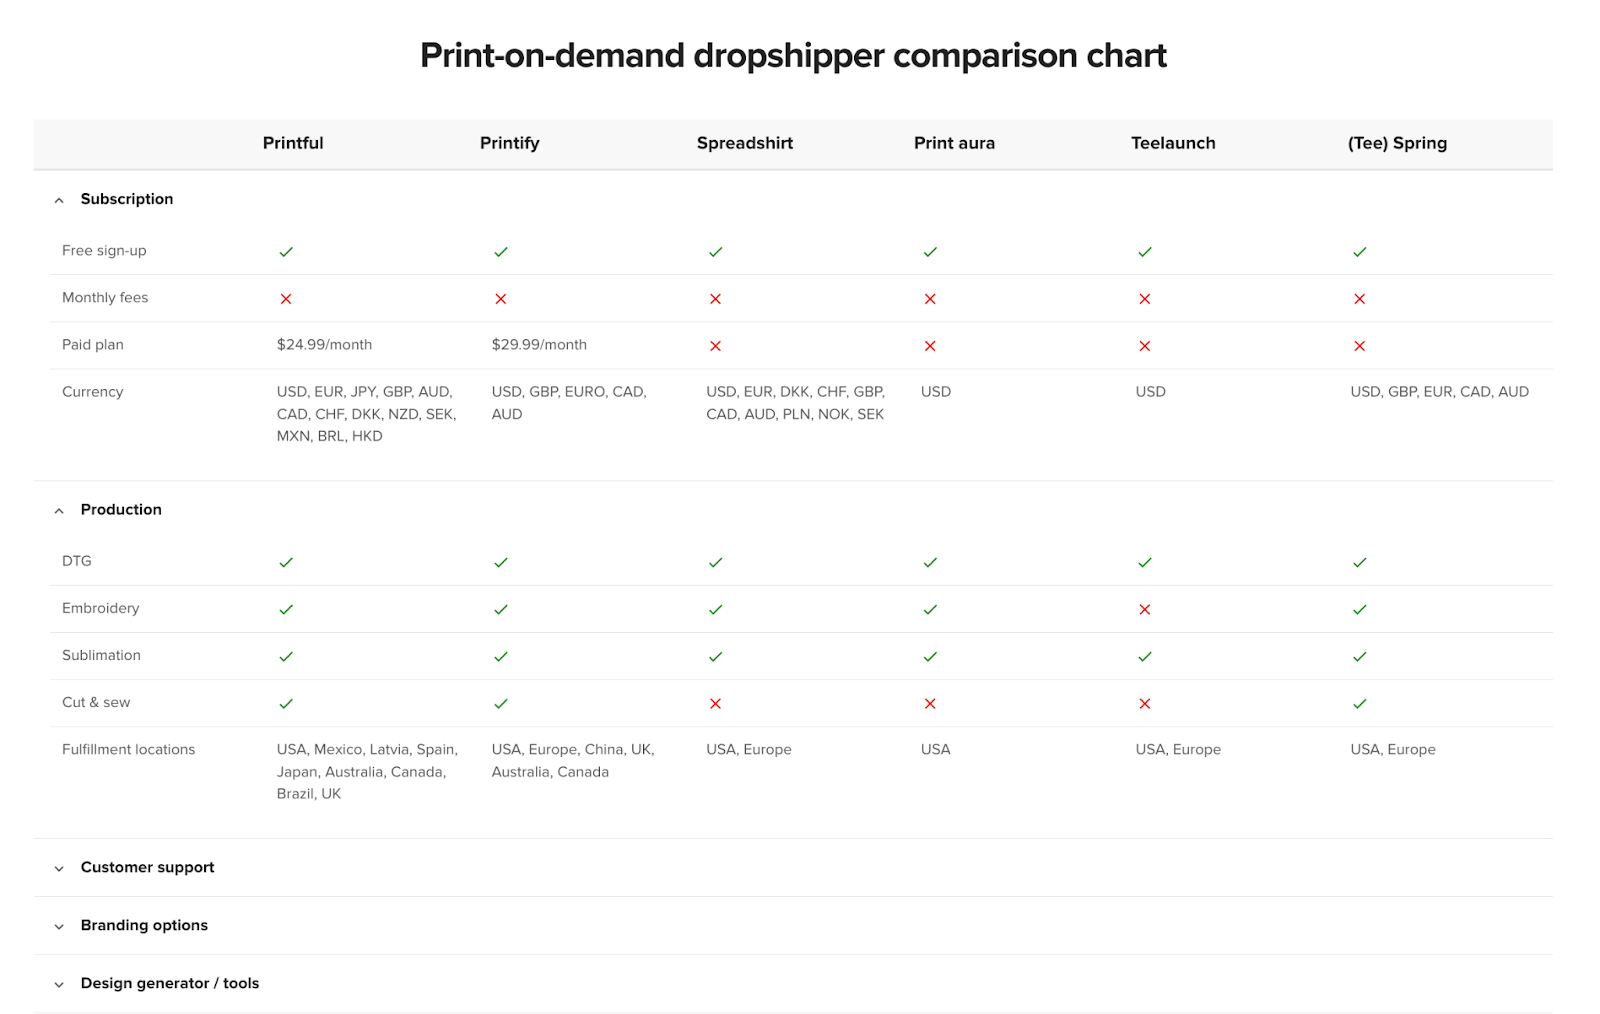 Print-on-demand dropshipping company comparison chart